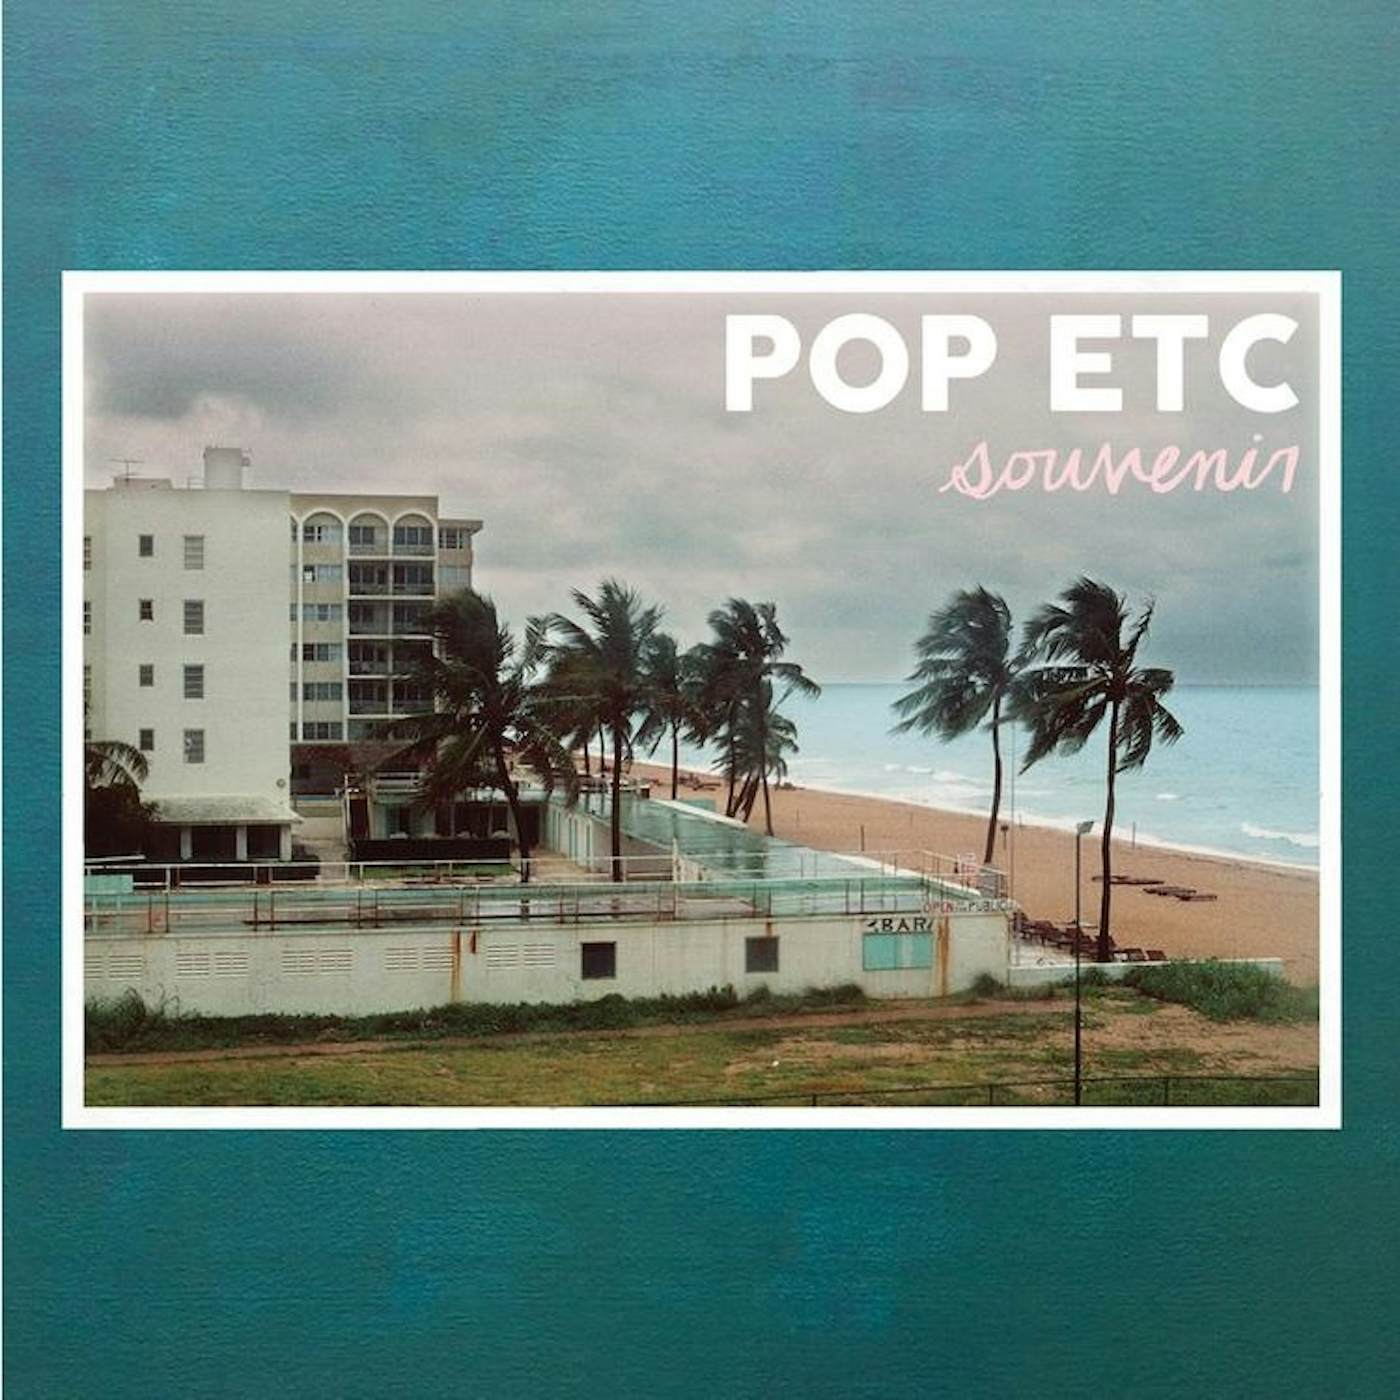 POP ETC Souvenir Vinyl Record